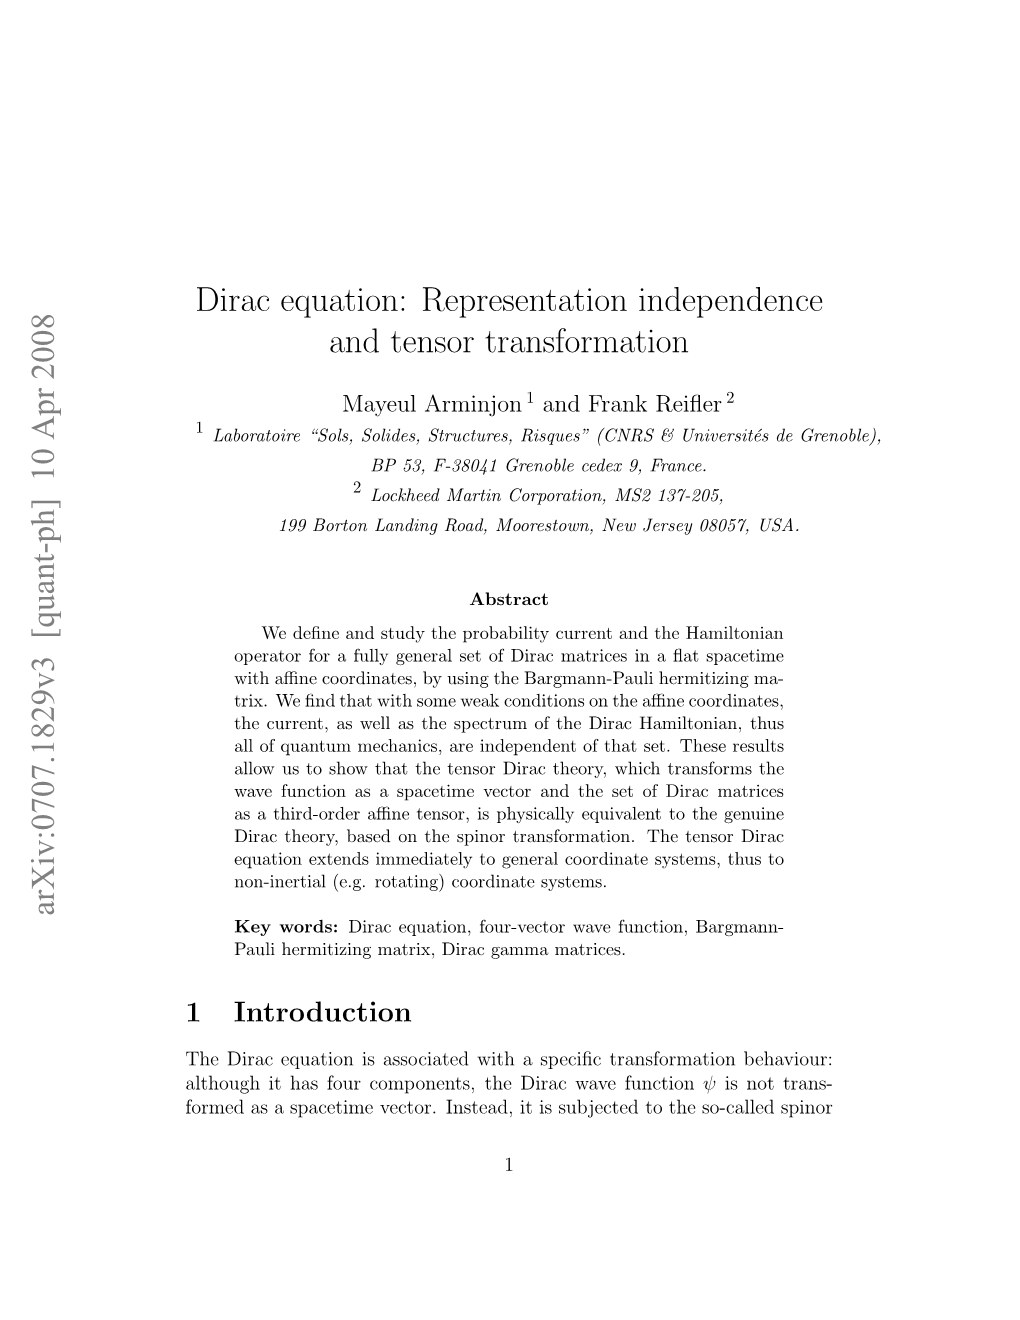 Dirac Equation: Representation Independence and Tensor